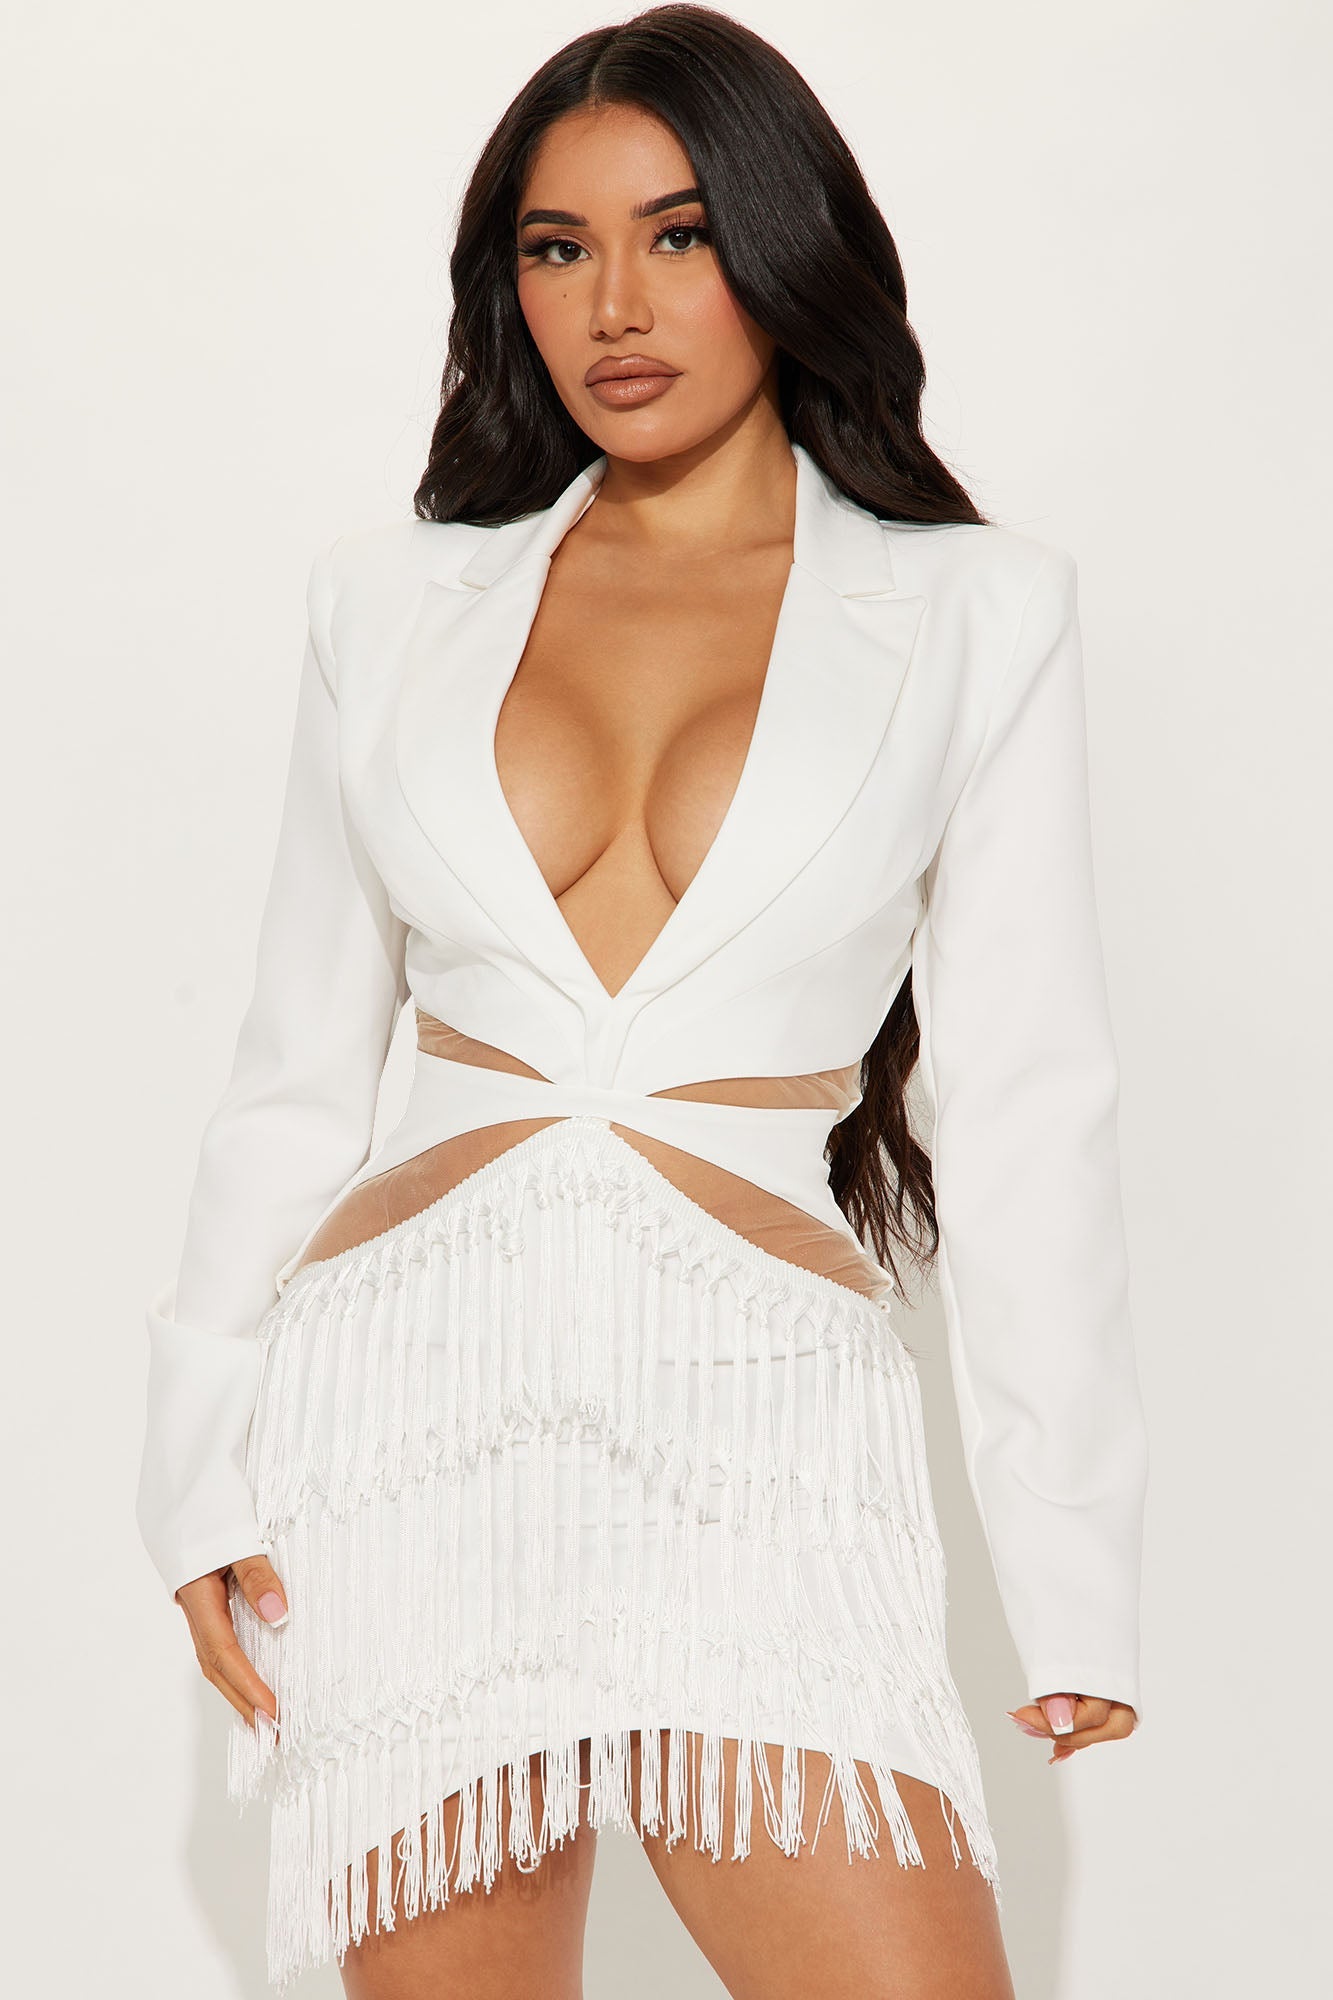 Risque Business Blazer Mini Dress - White